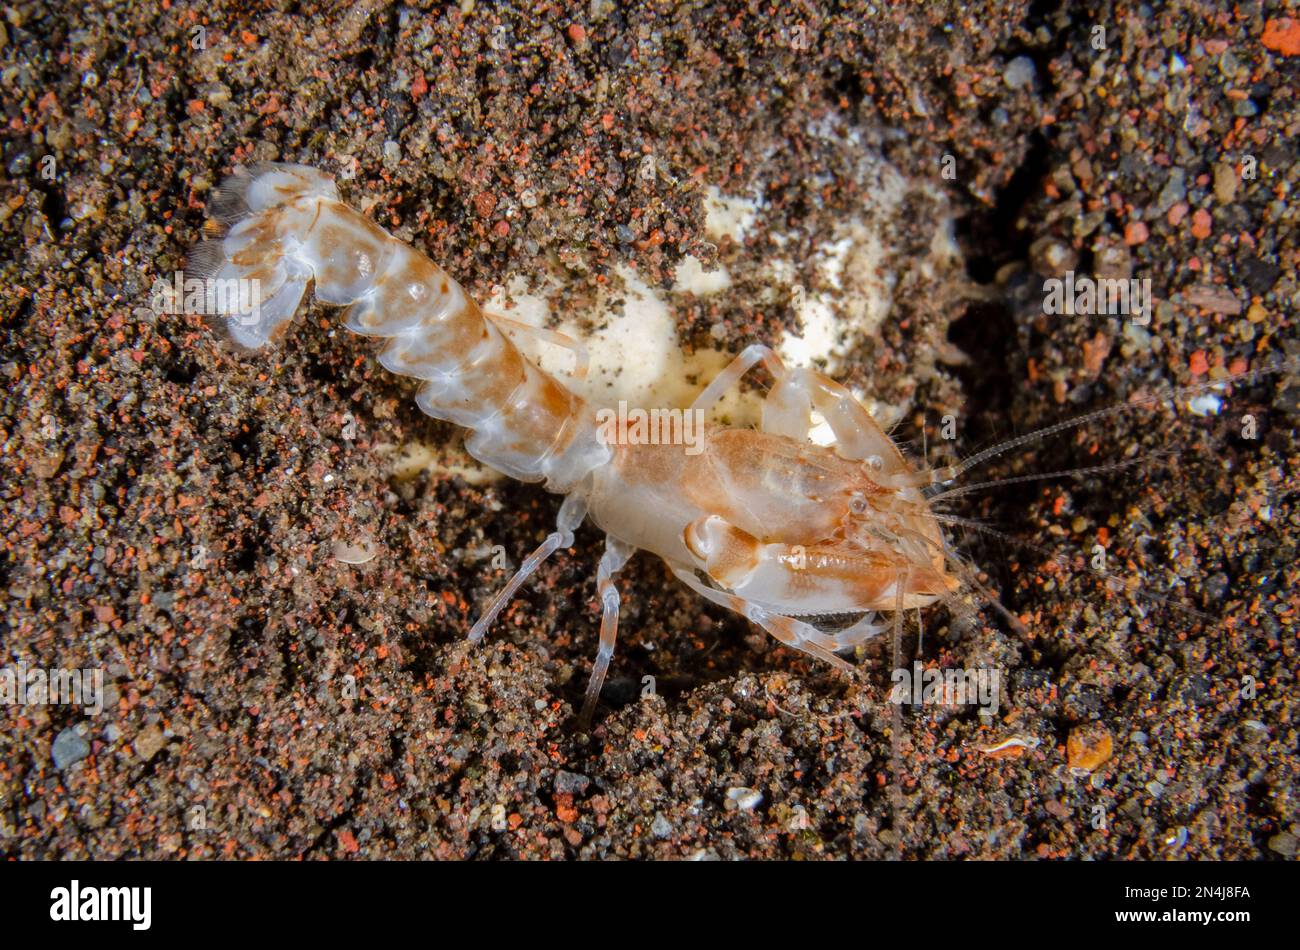 Snapping Shrimp on sand, Alpheus sp, night dive, Scuba Seraya House Reef dive site, Seraya, Kubu district, Karangasem, Bali, Indonesia, Indian Ocean Stock Photo